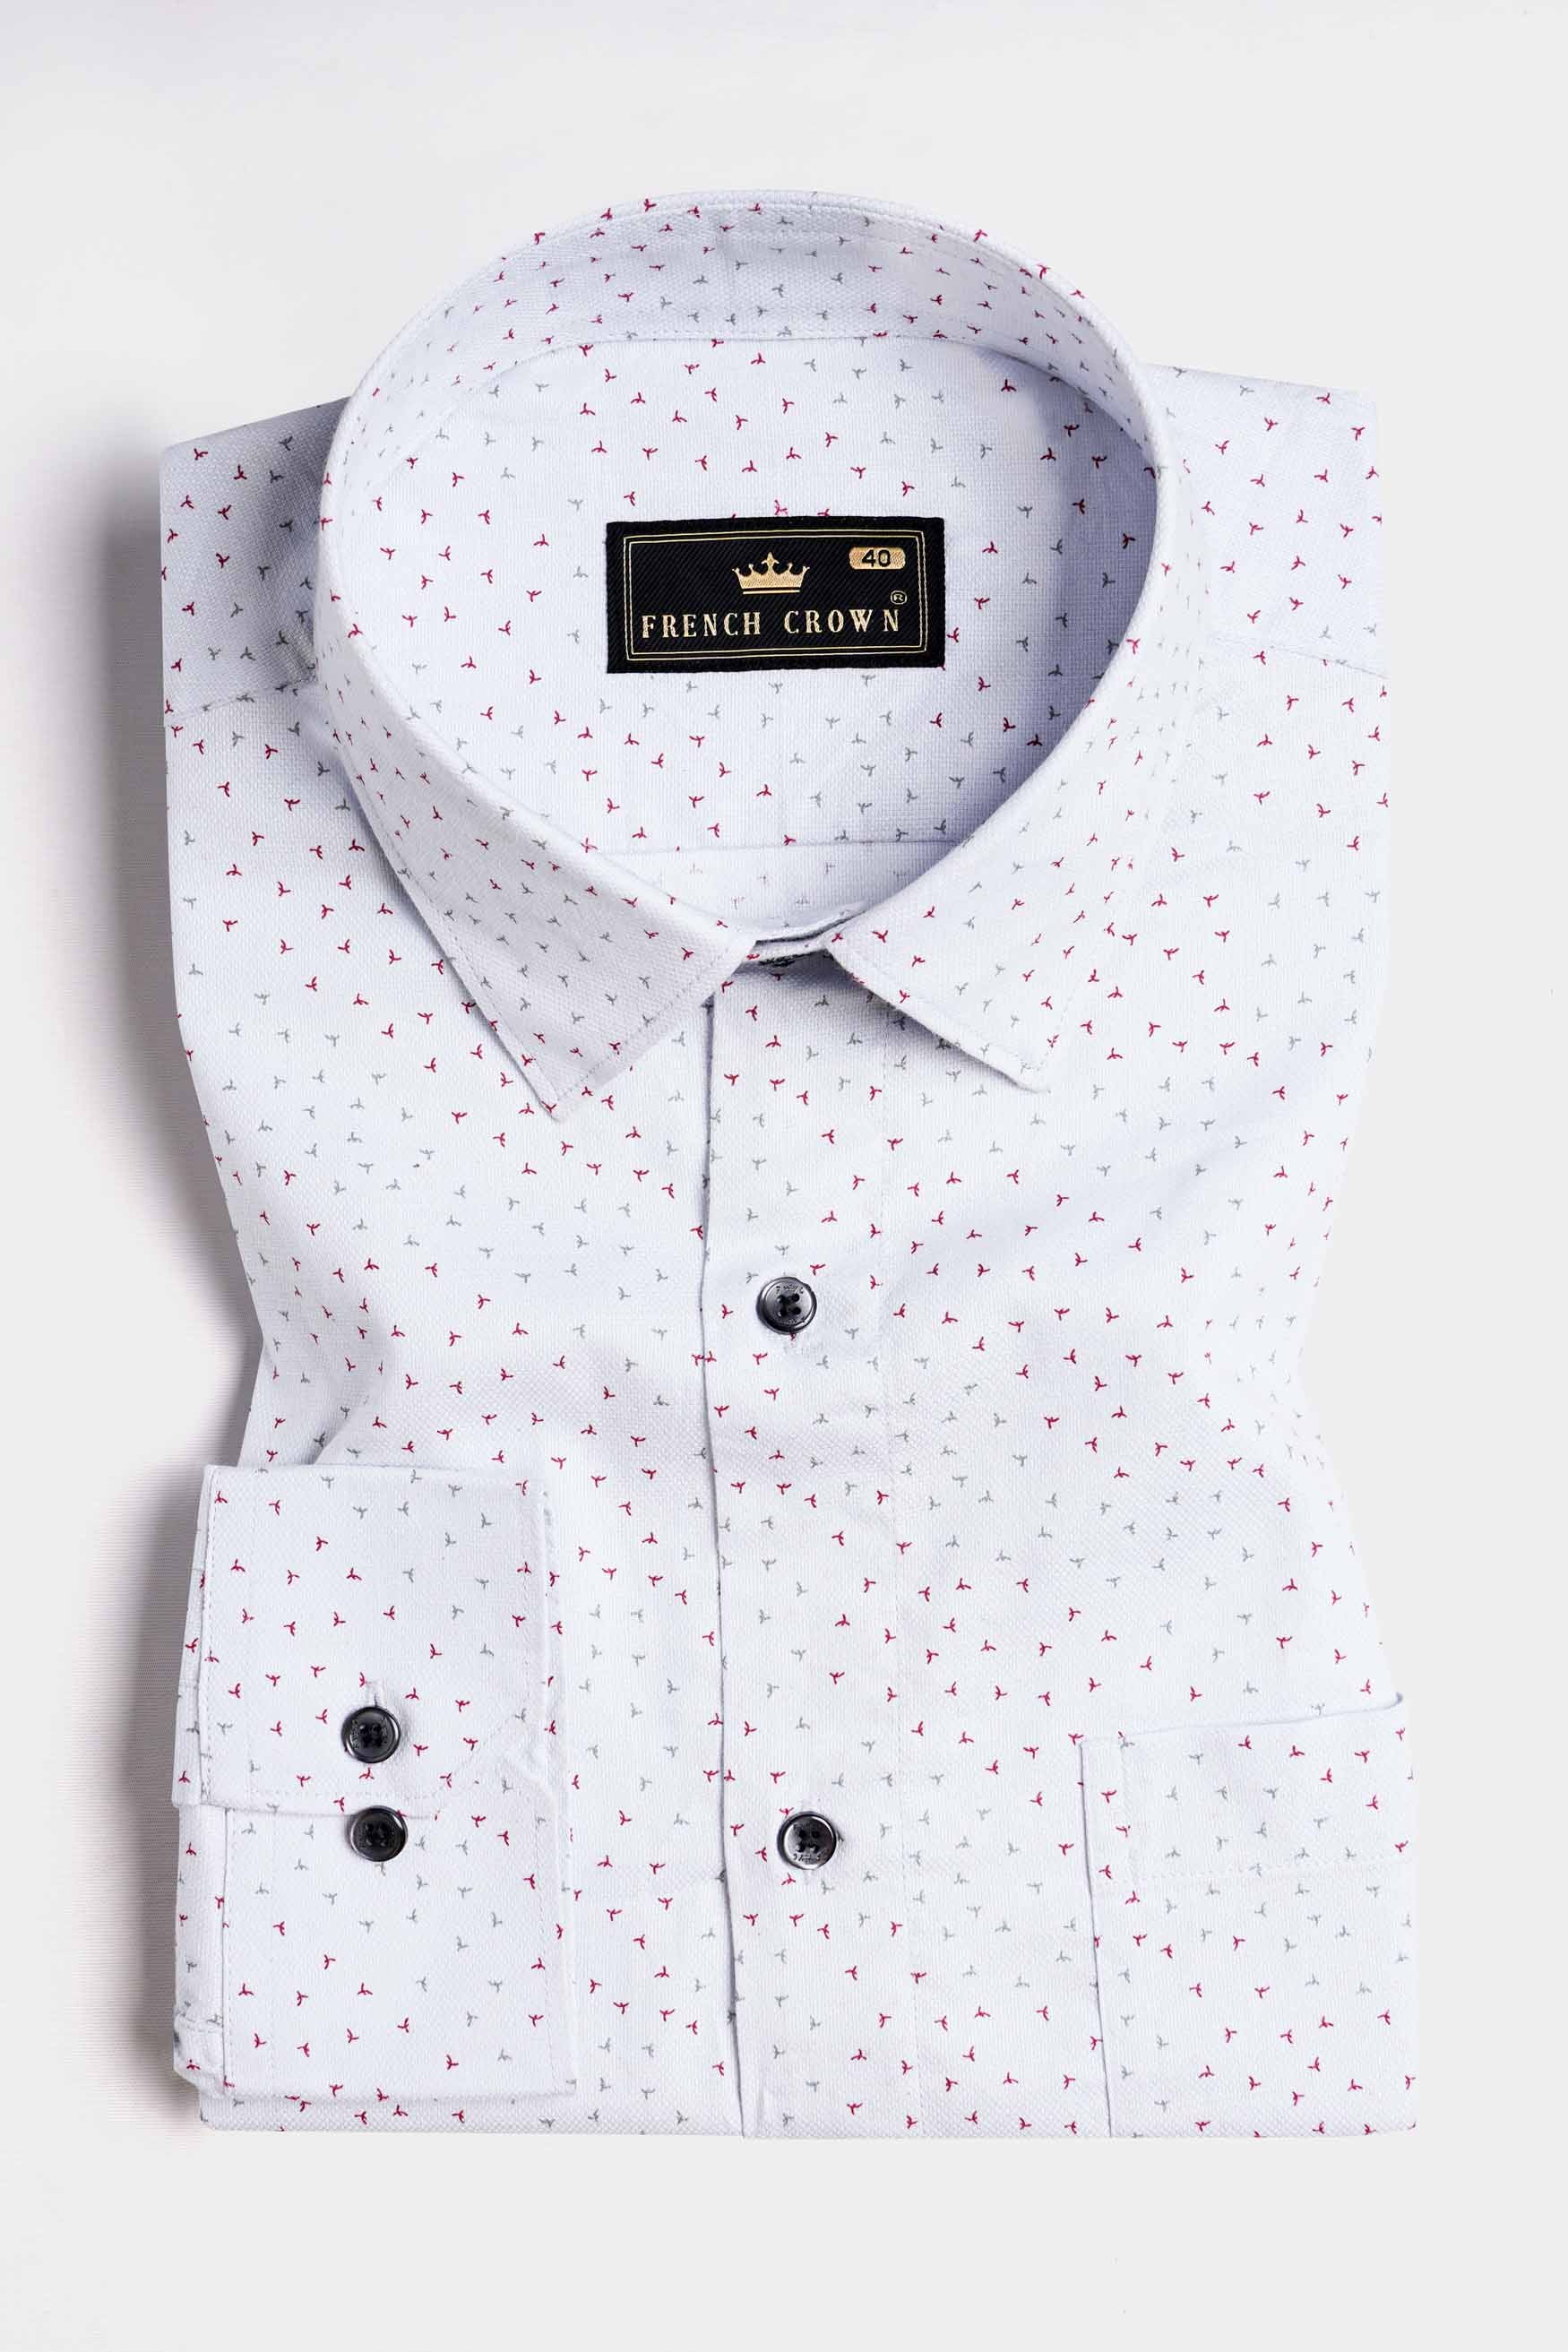 Off White Dobby Textured Premium Giza Cotton Shirt